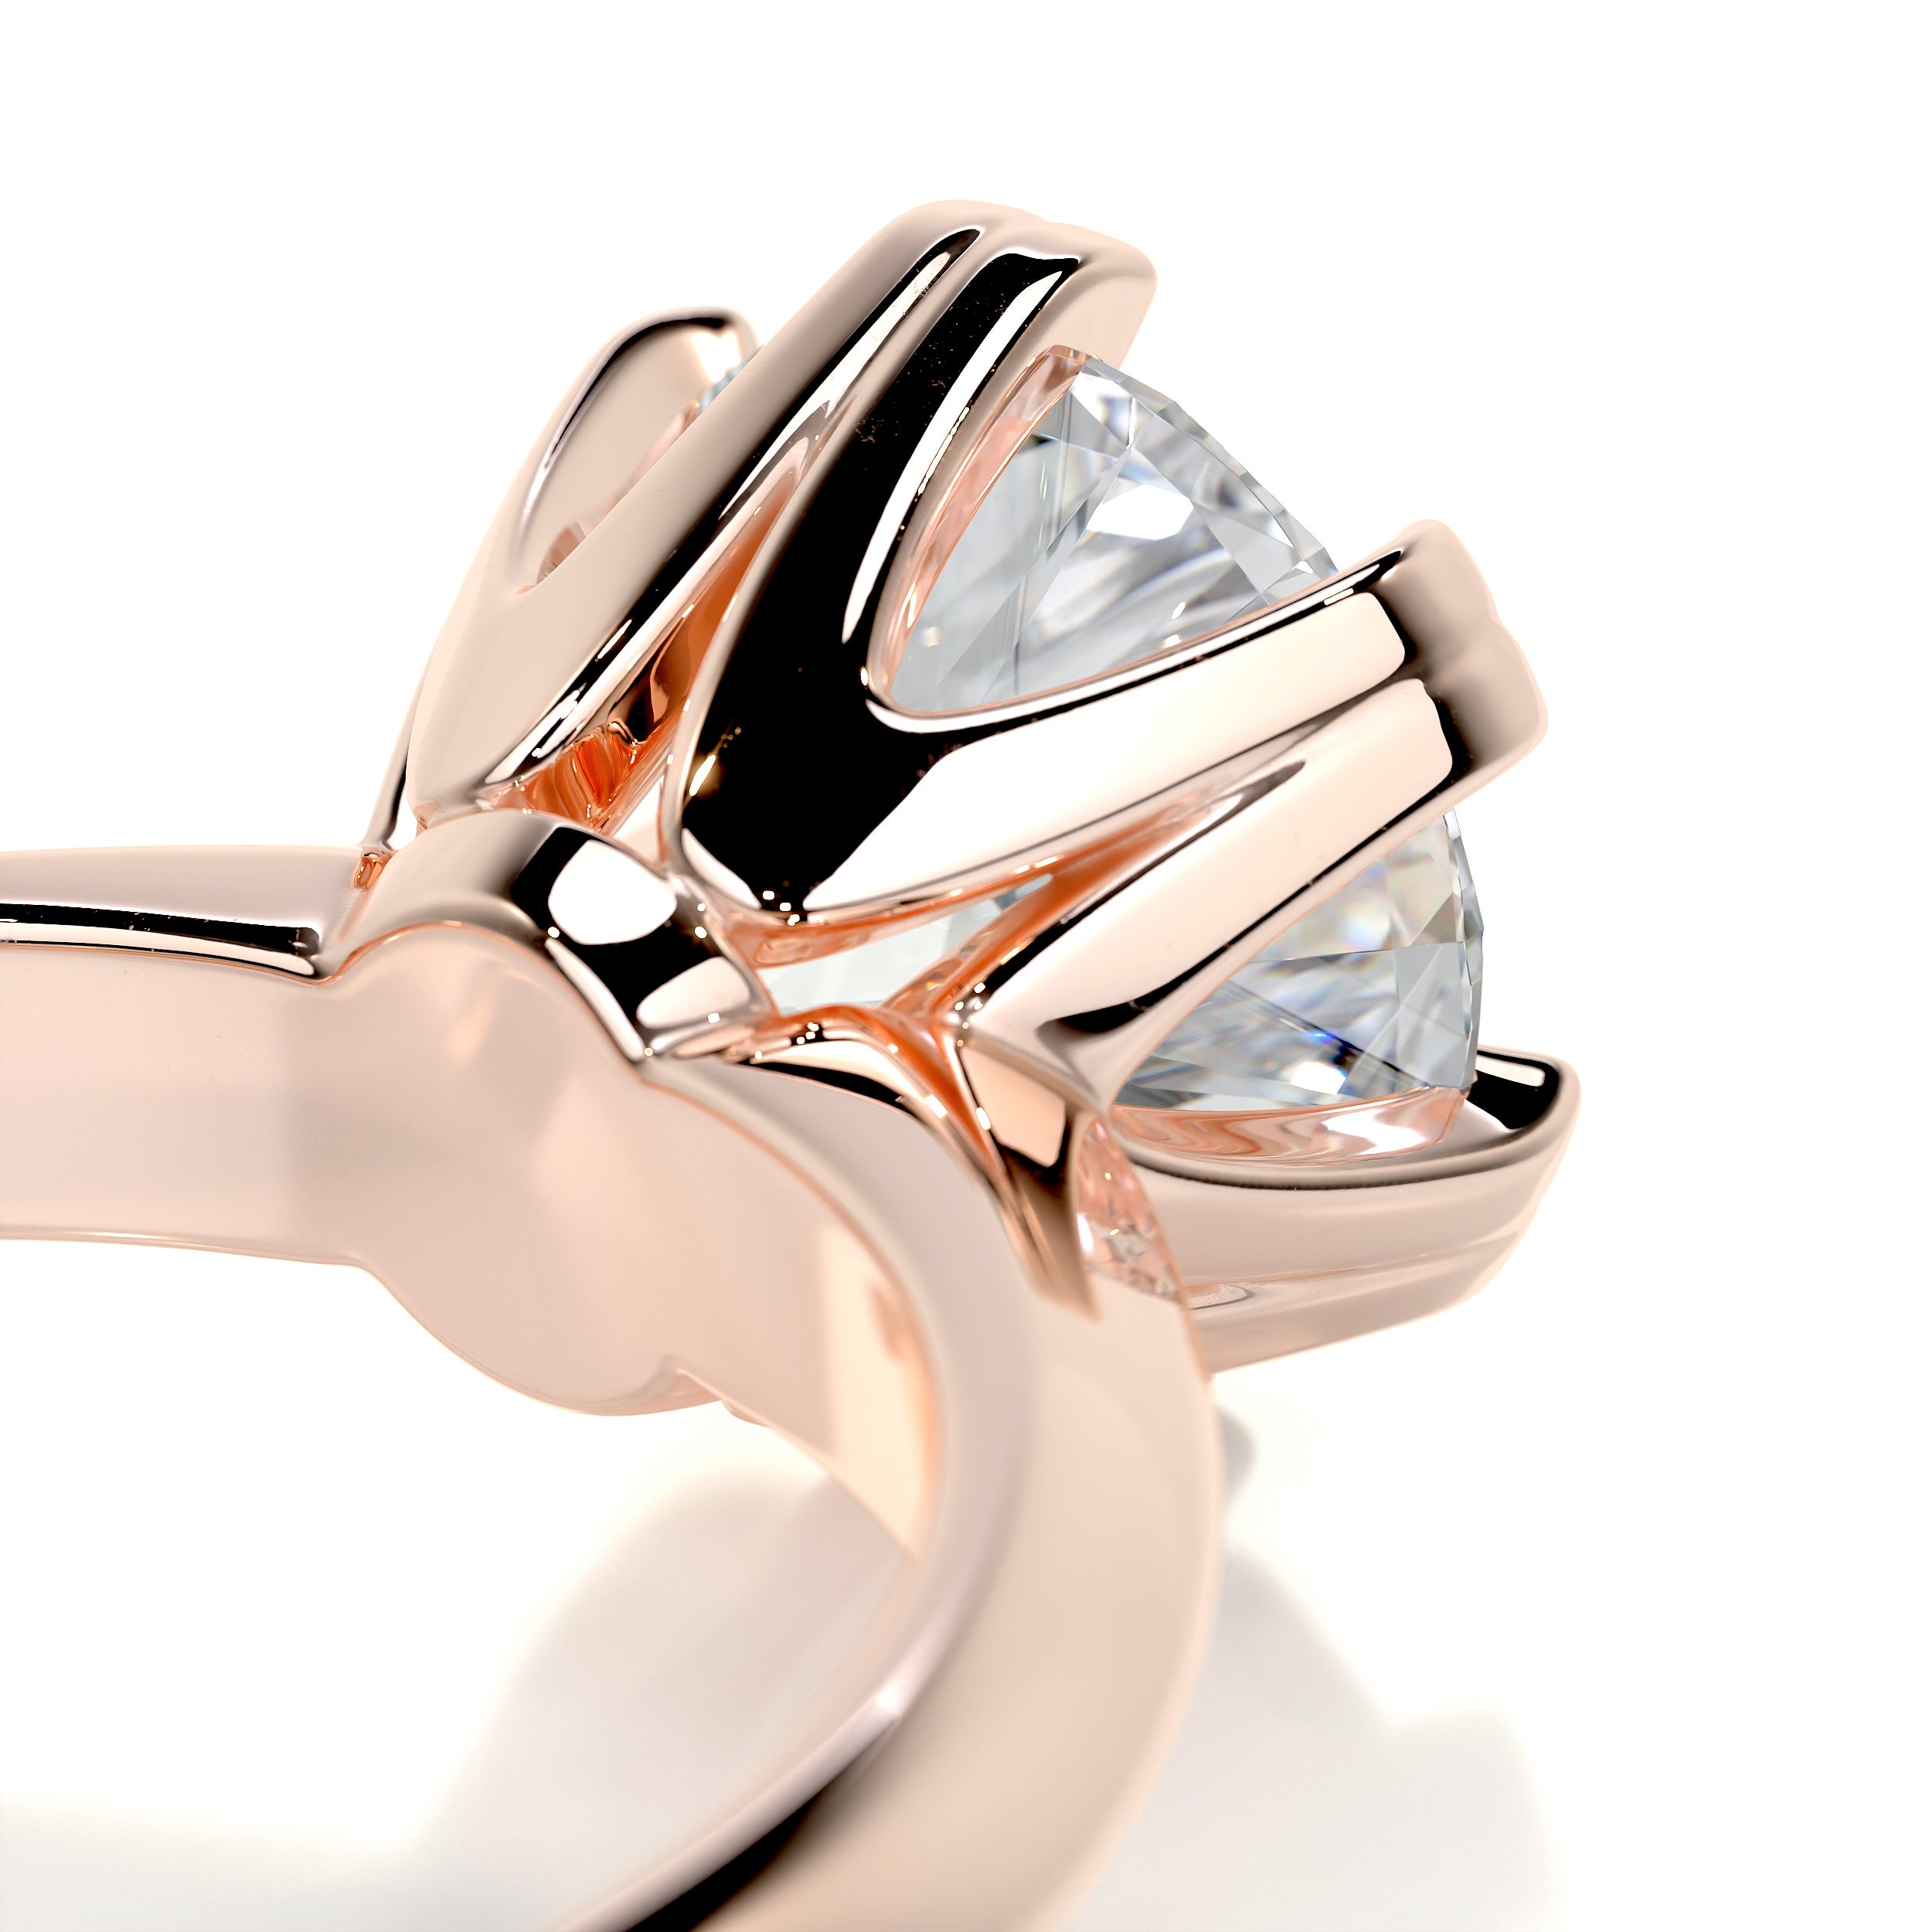 Alexis Diamond Engagement Ring -14K Rose Gold